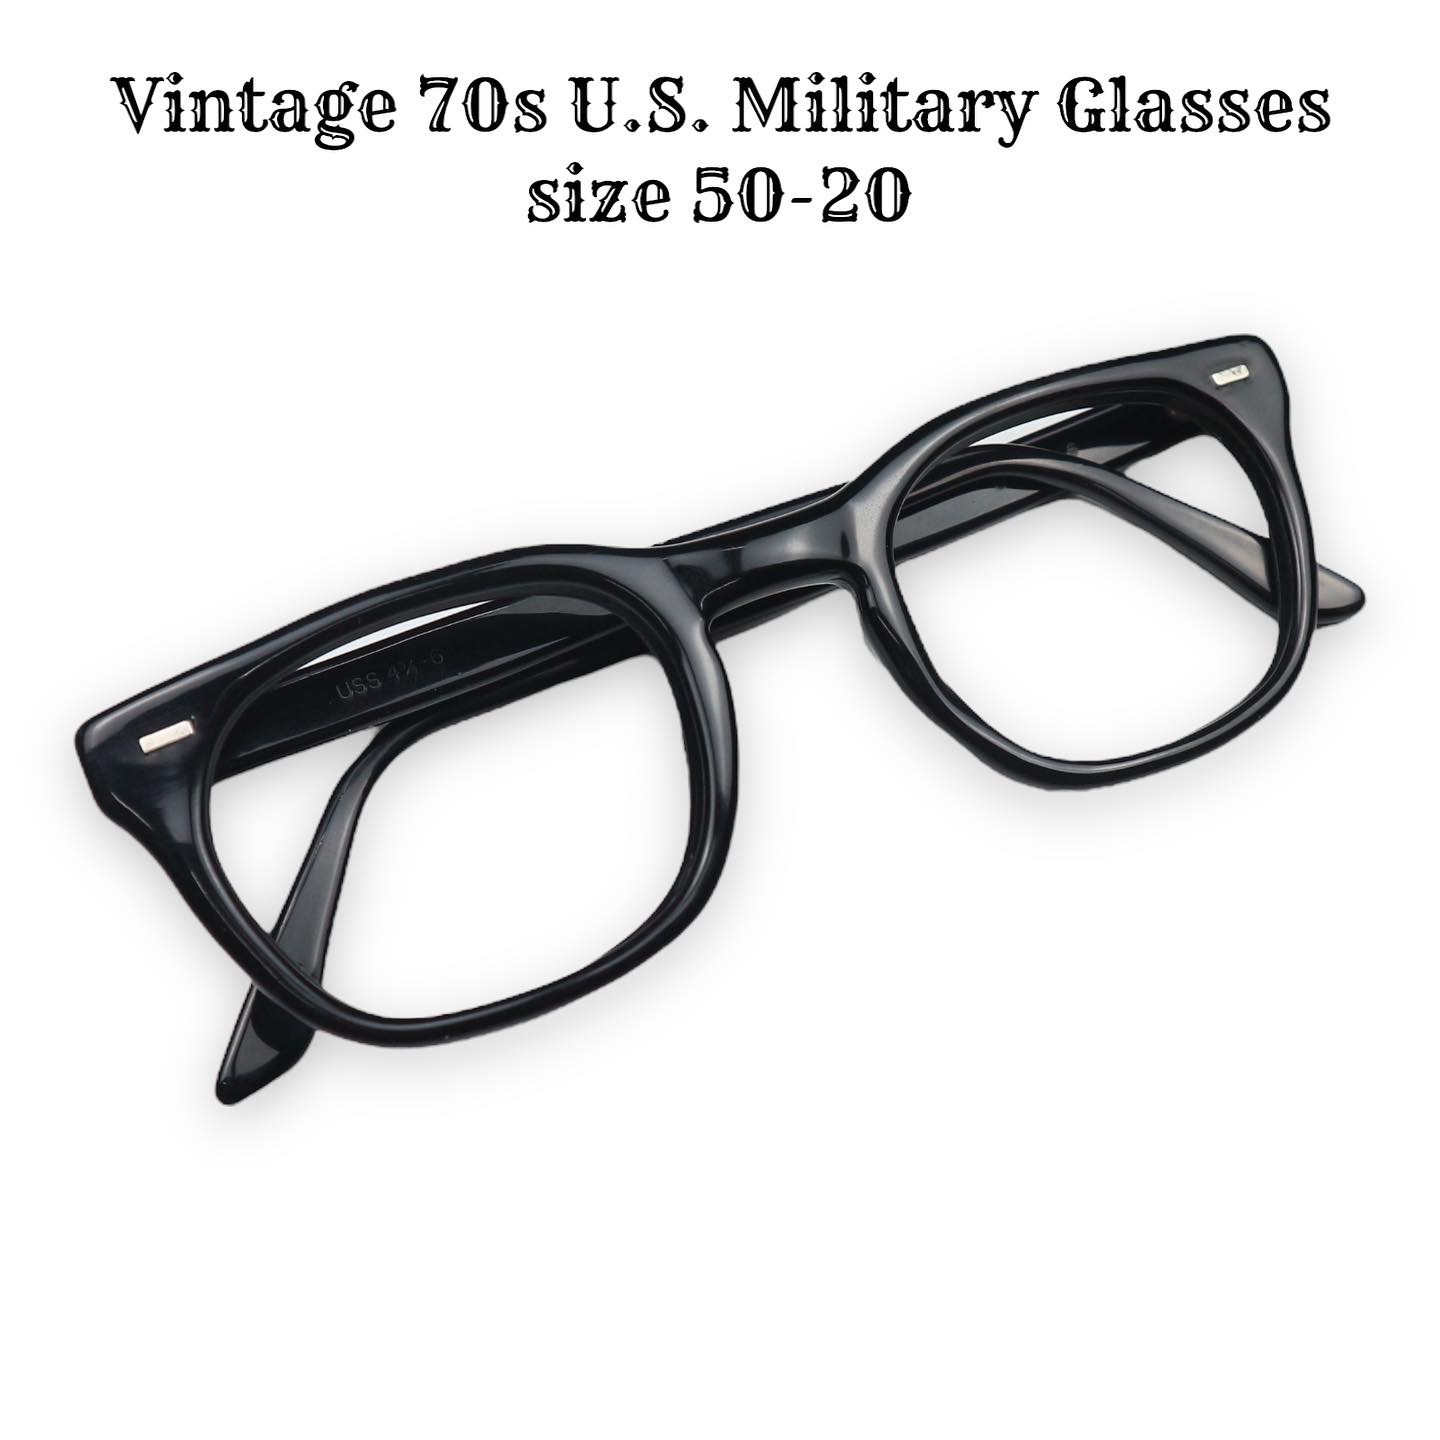 Vintage 70s U.S. Military Glasses Size 50-20